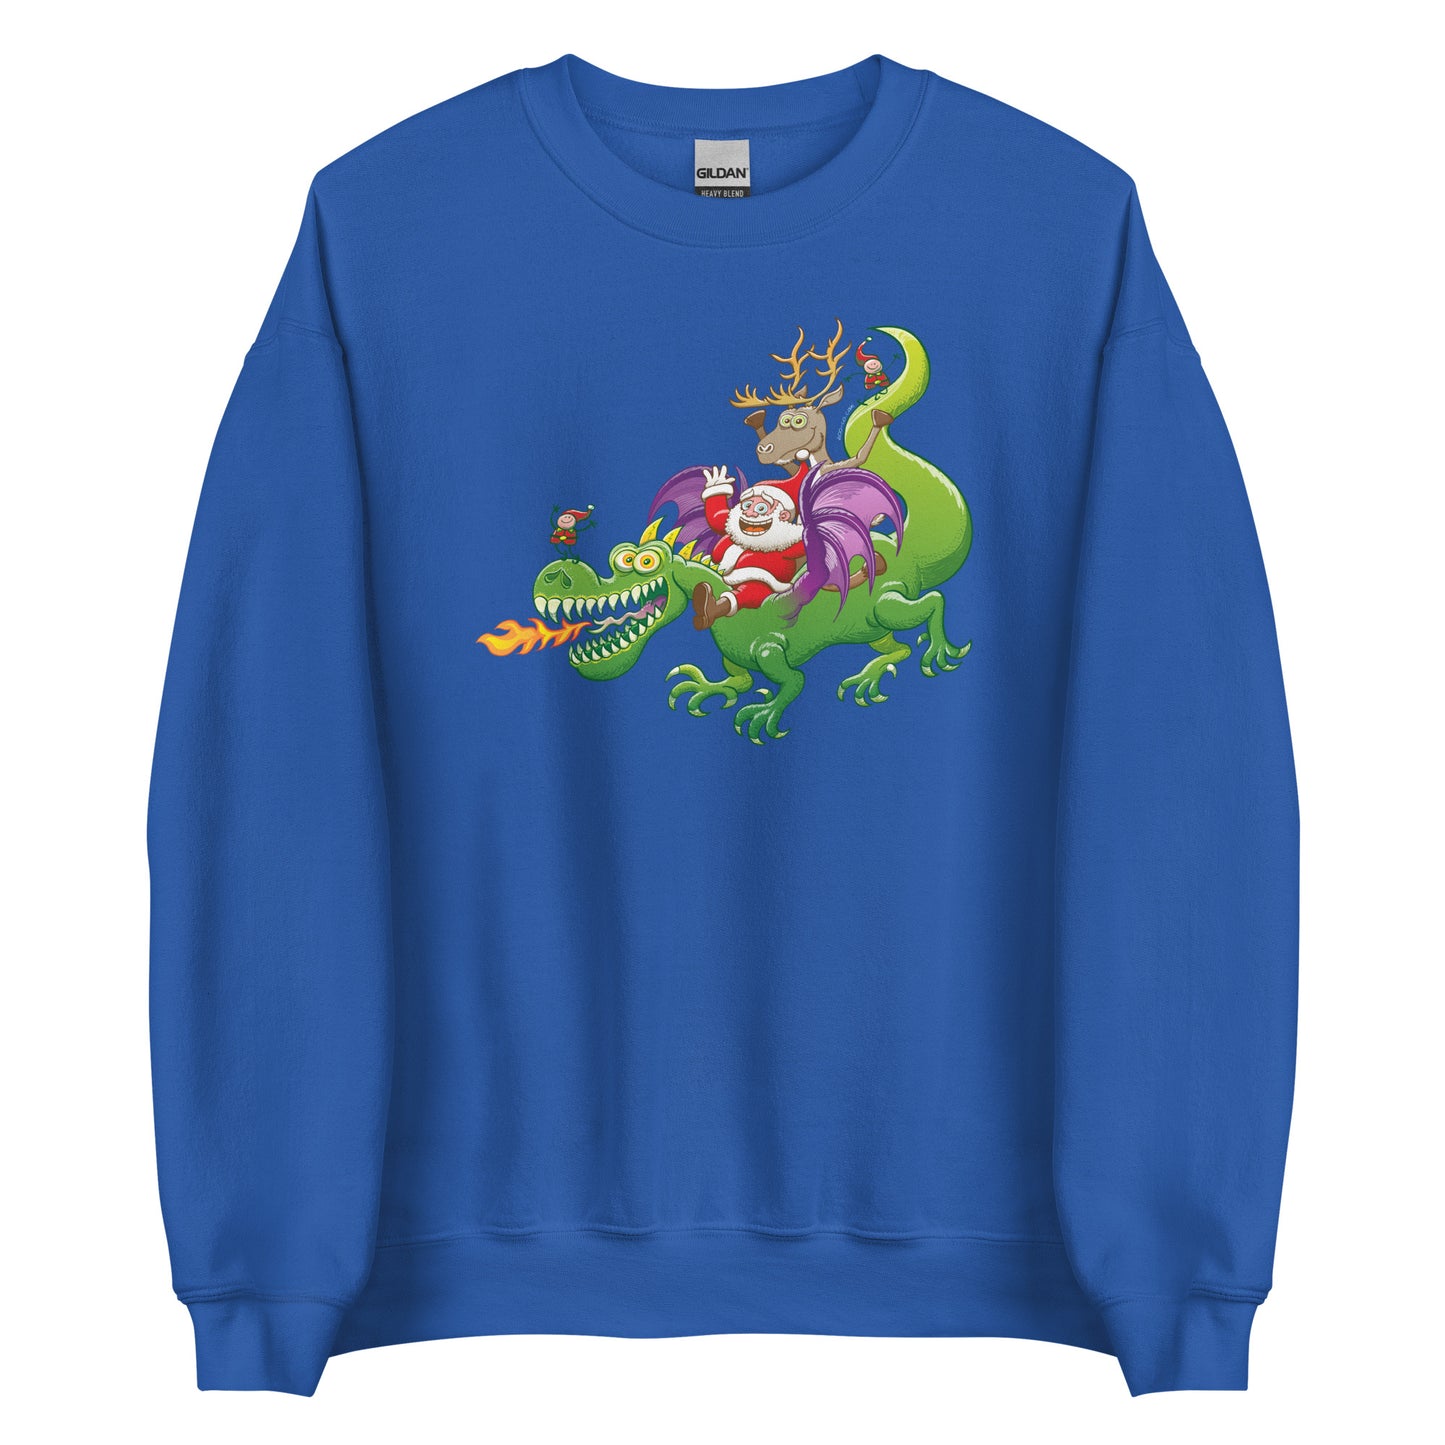 Santa's Dragon-Powered Christmas: A Holiday Adventure - Unisex Sweatshirt. Royal blue. Front view